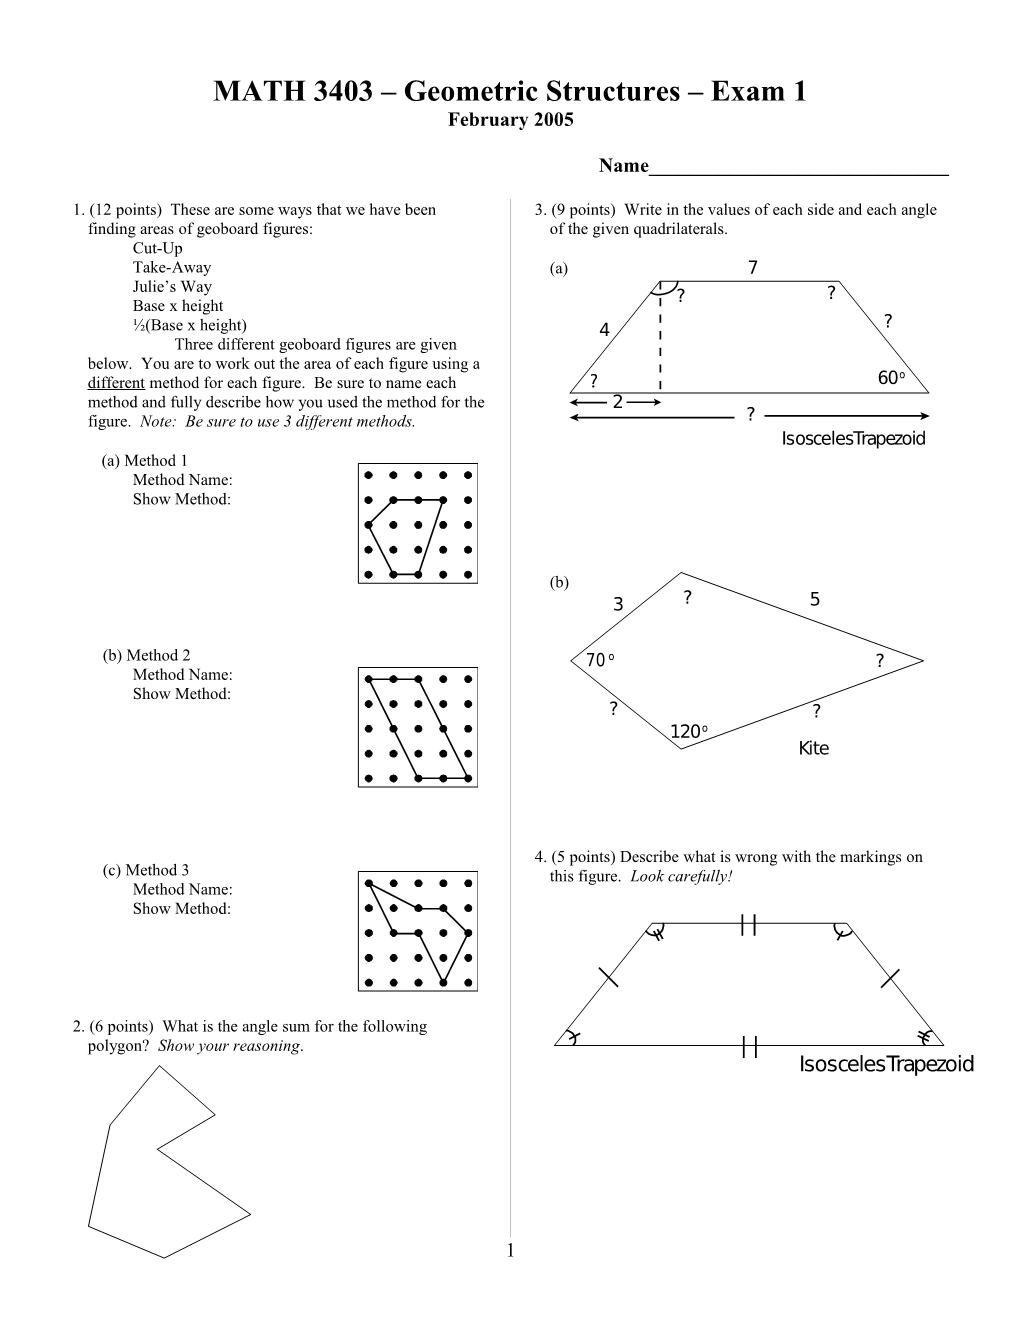 MATH 3403 Geometric Structures Exam 1